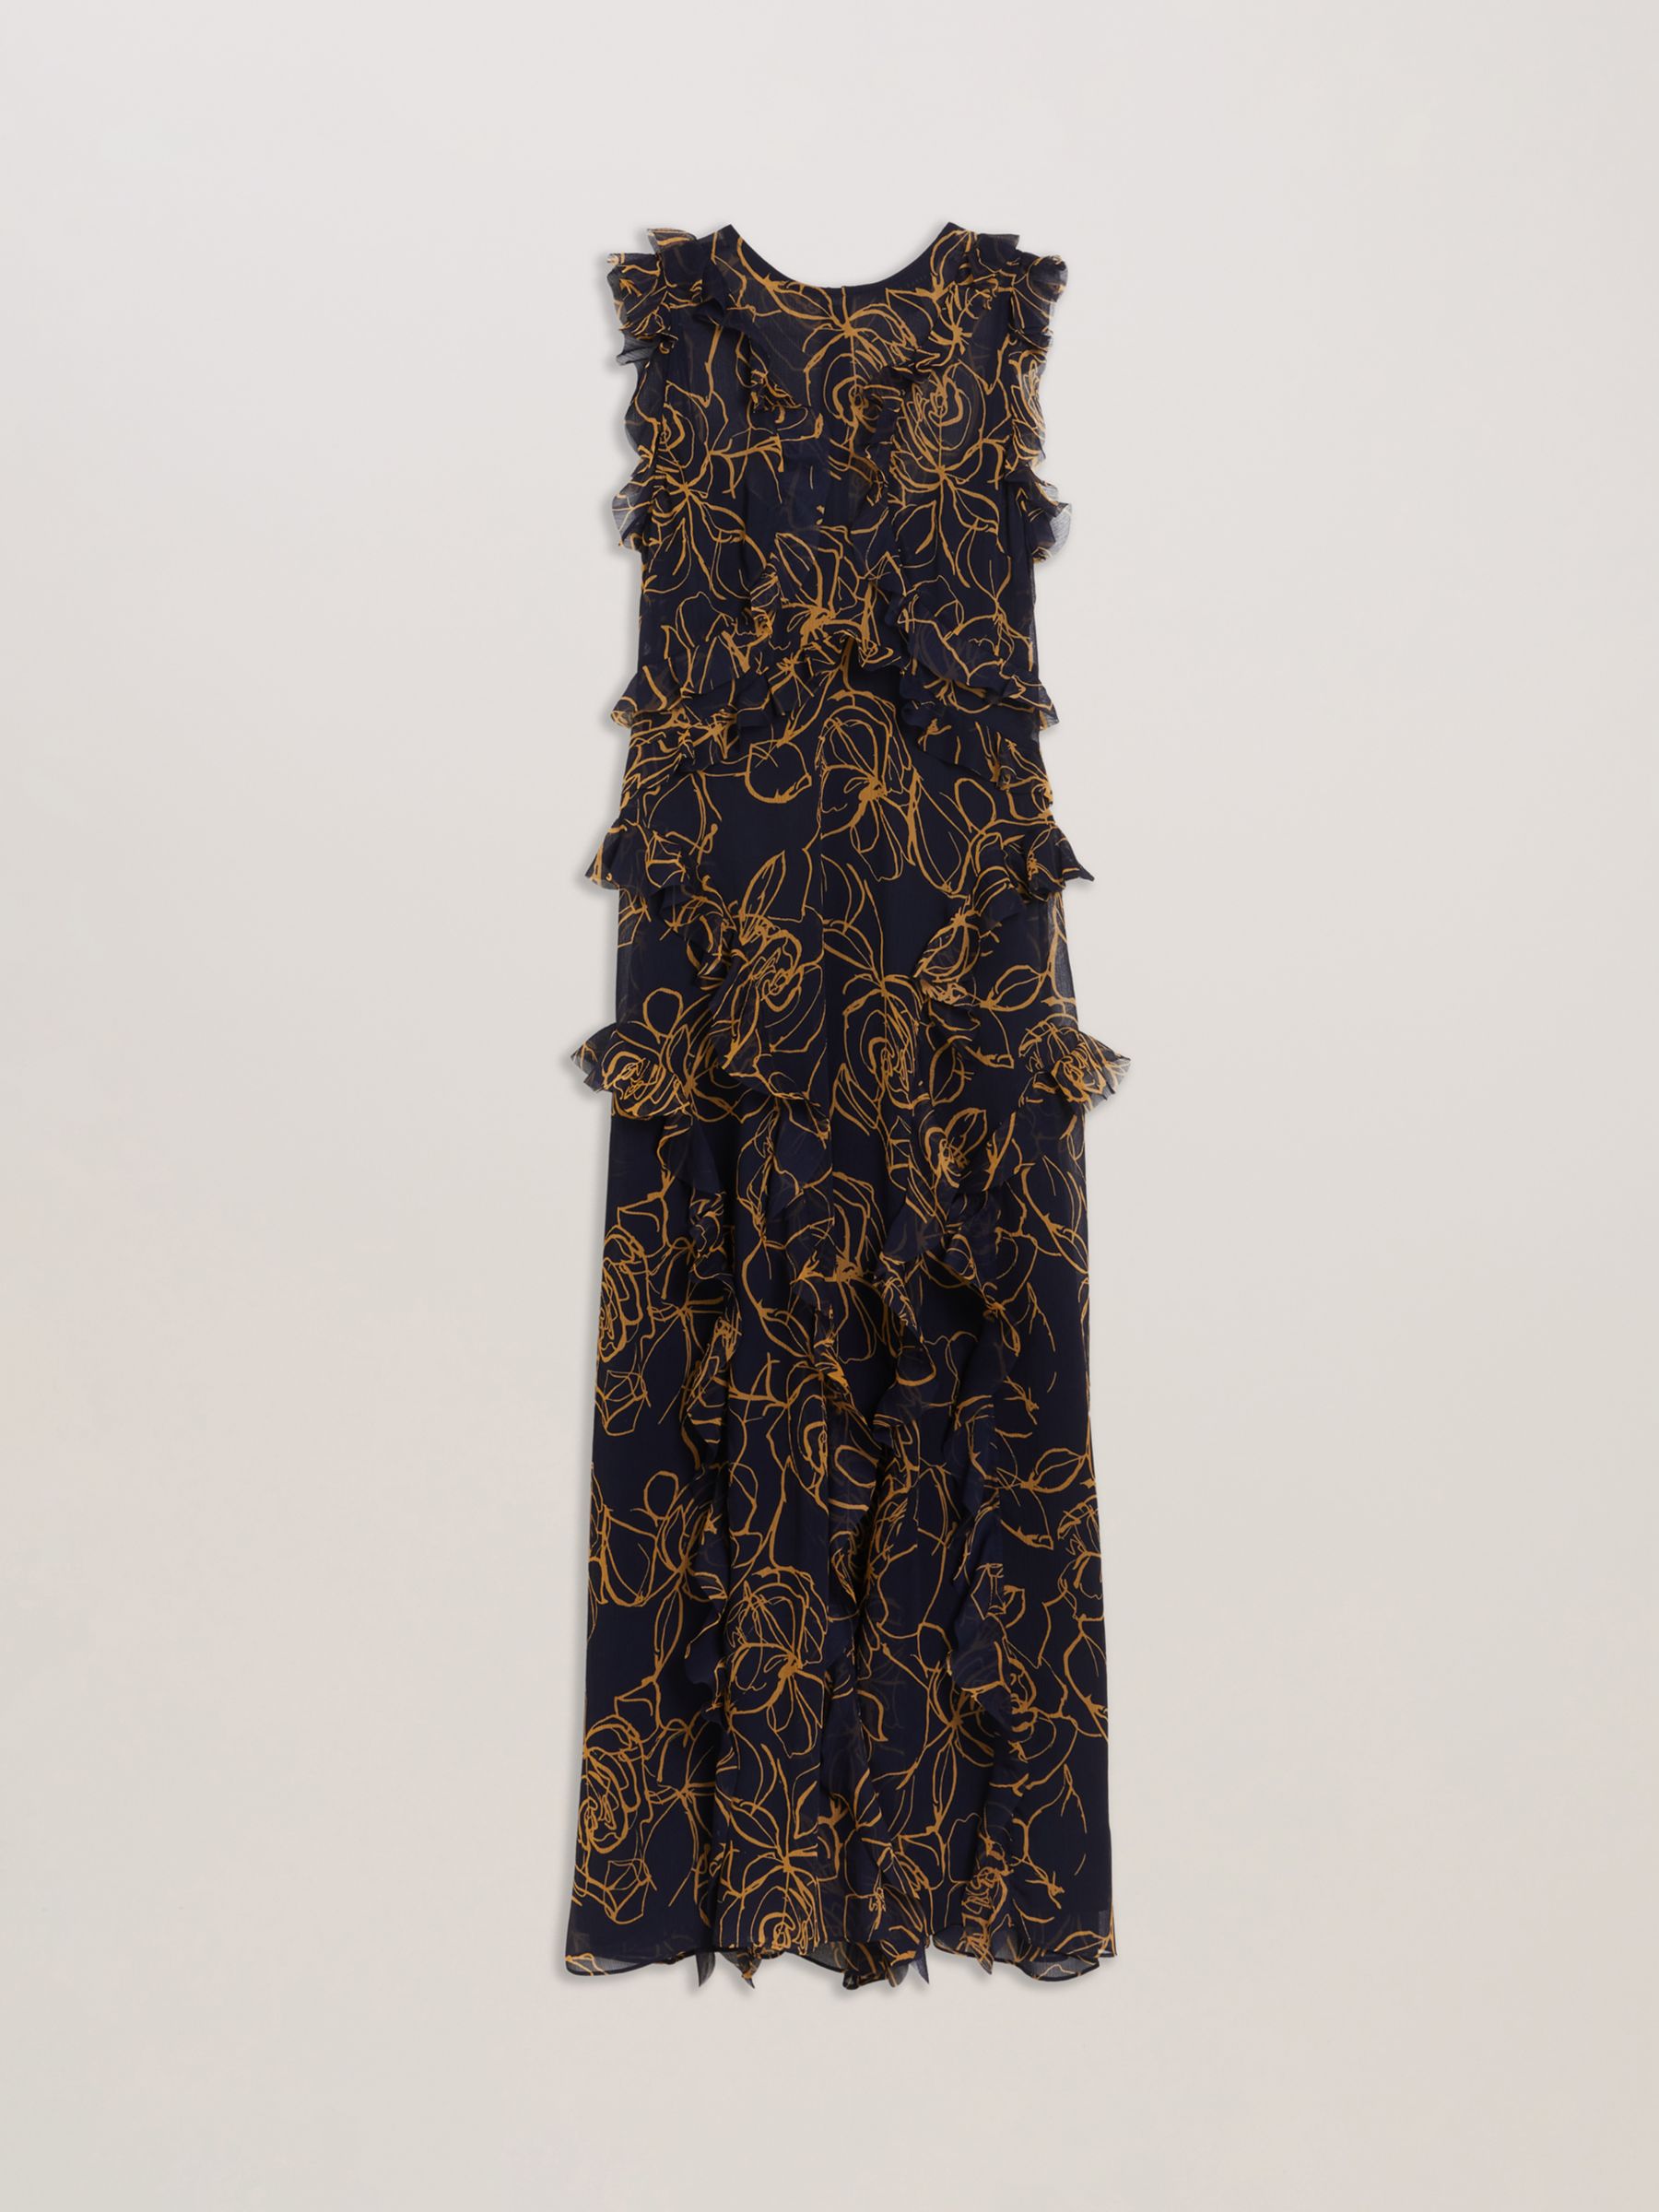 Ted Baker Rize Floral Frill Midi Dress, Navy/Orange, 14